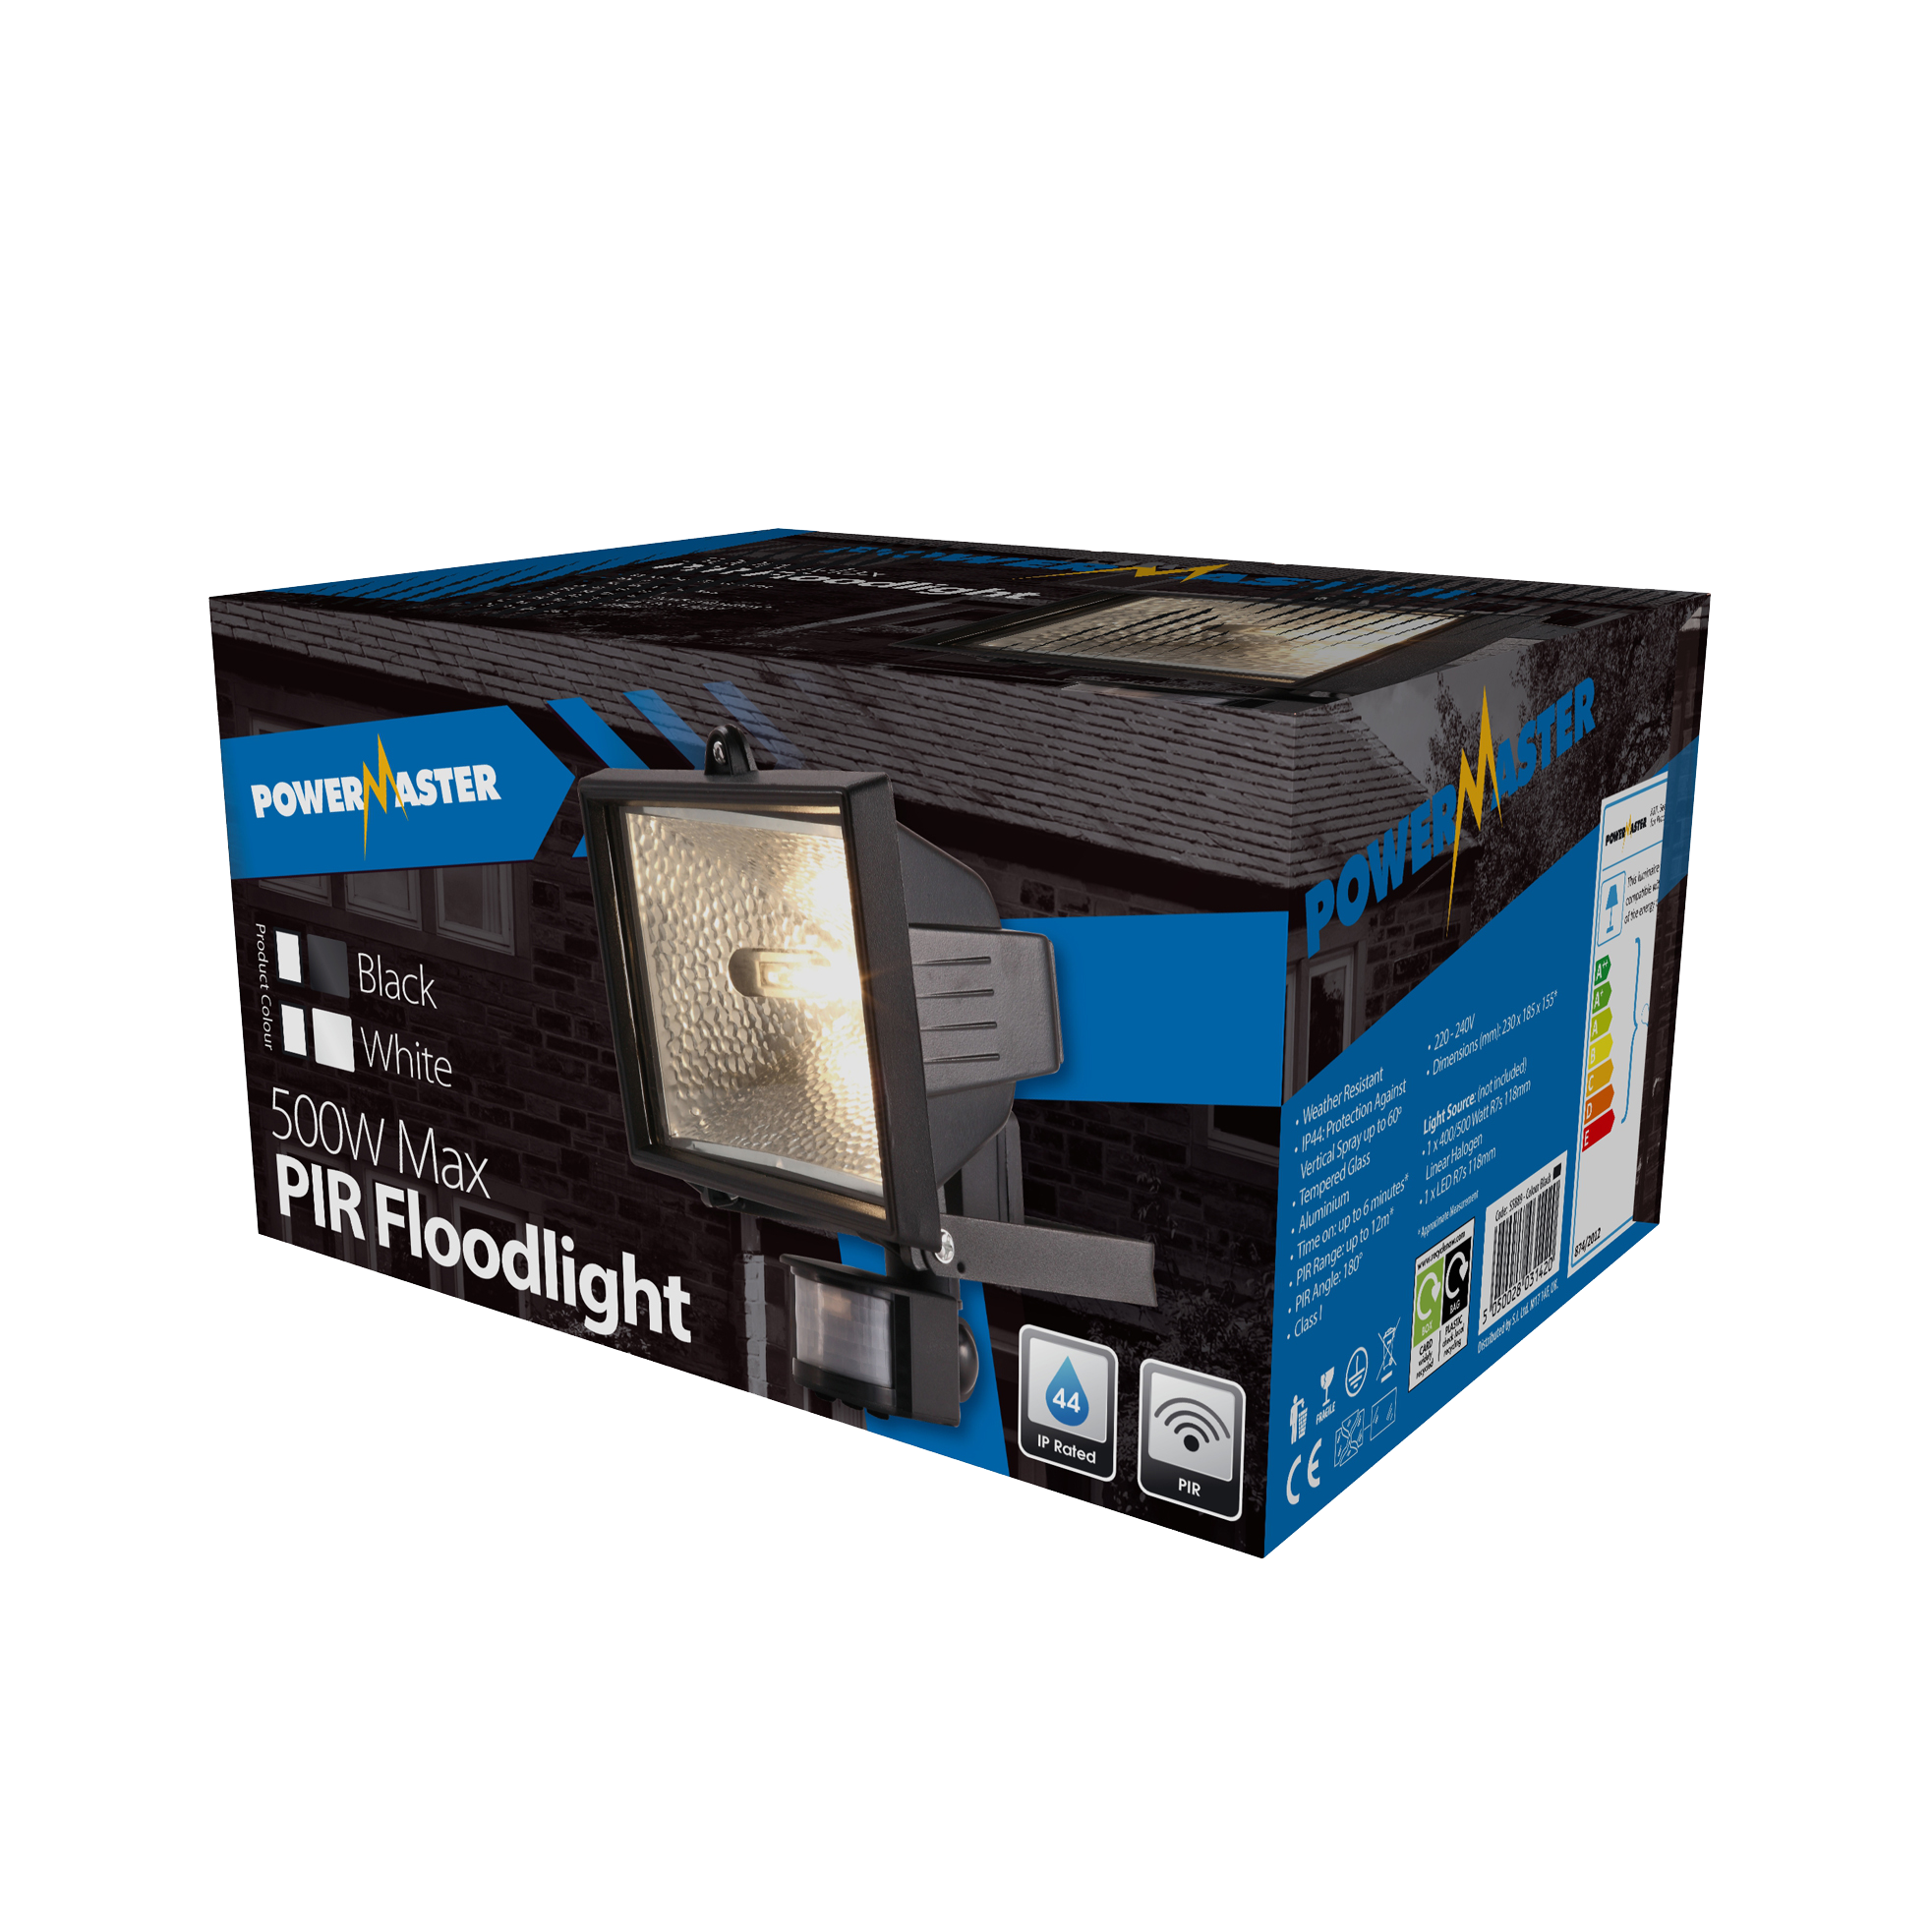 PowerMaster 500W Eco Halogen PIR Floodlight - Black - Lamp Not Included